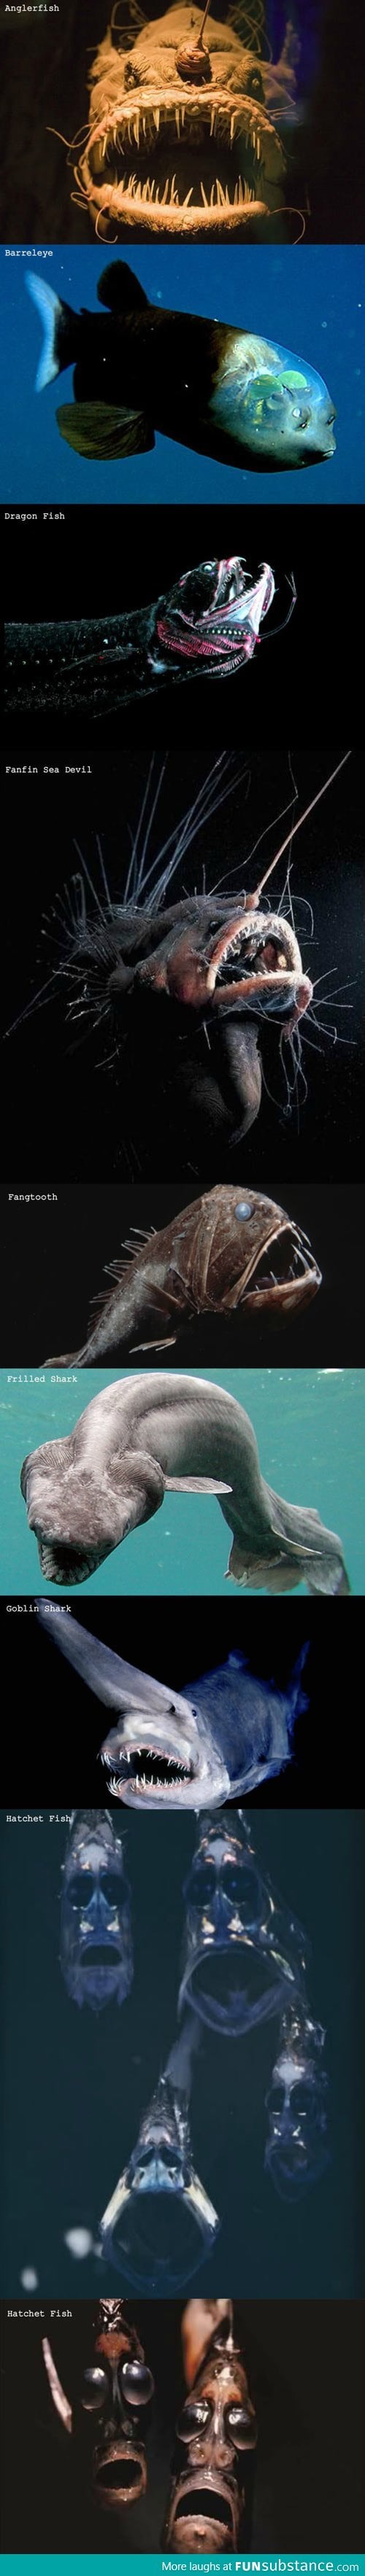 Strange creatures of the sea